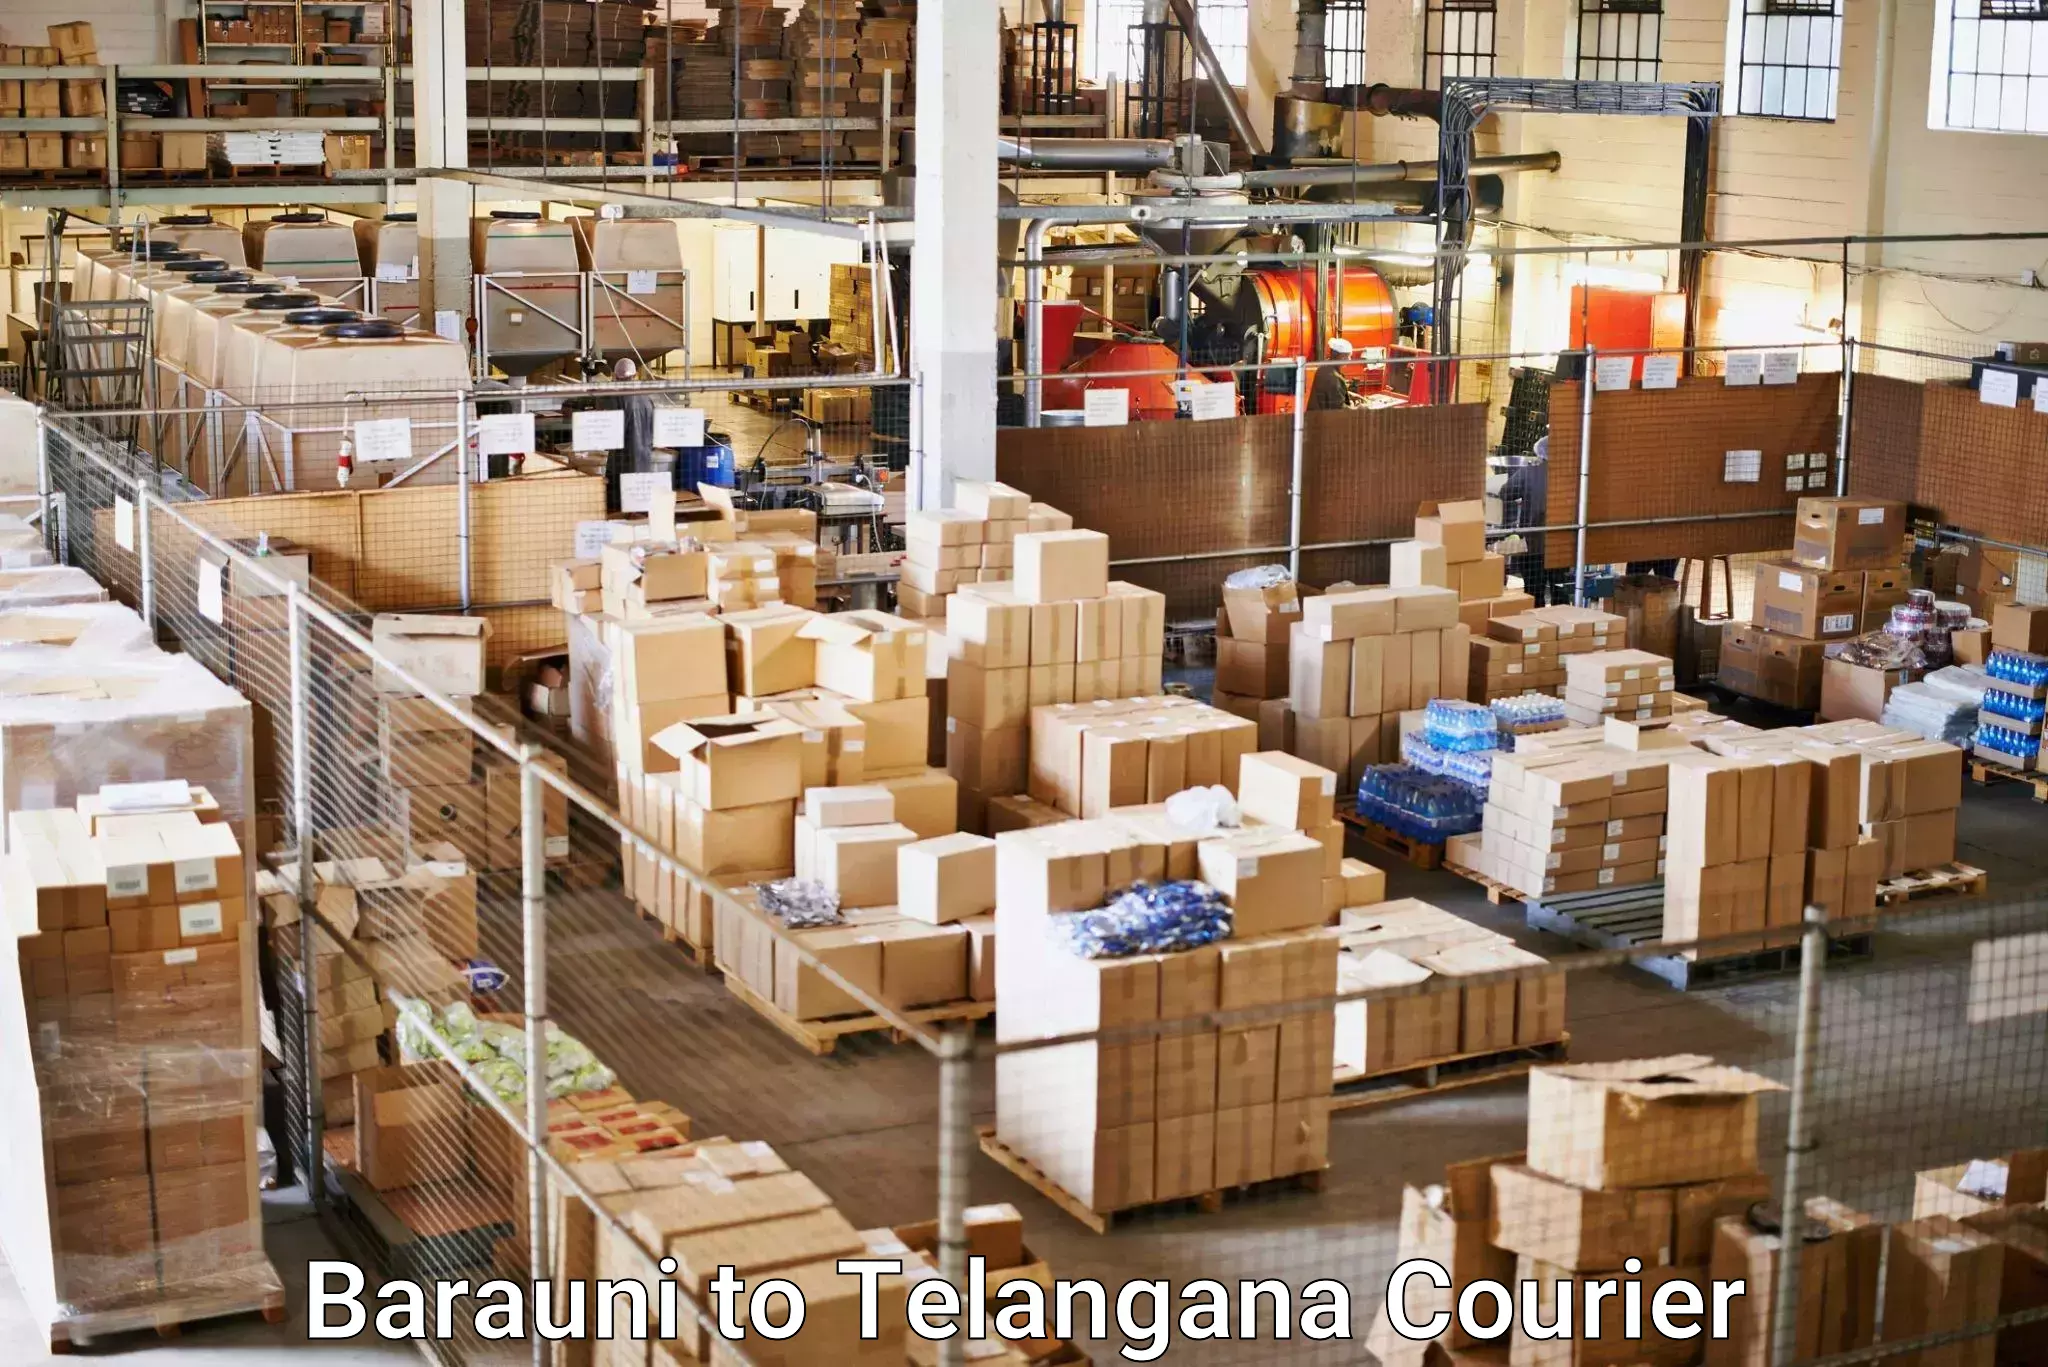 Seamless shipping experience Barauni to Aswaraopeta